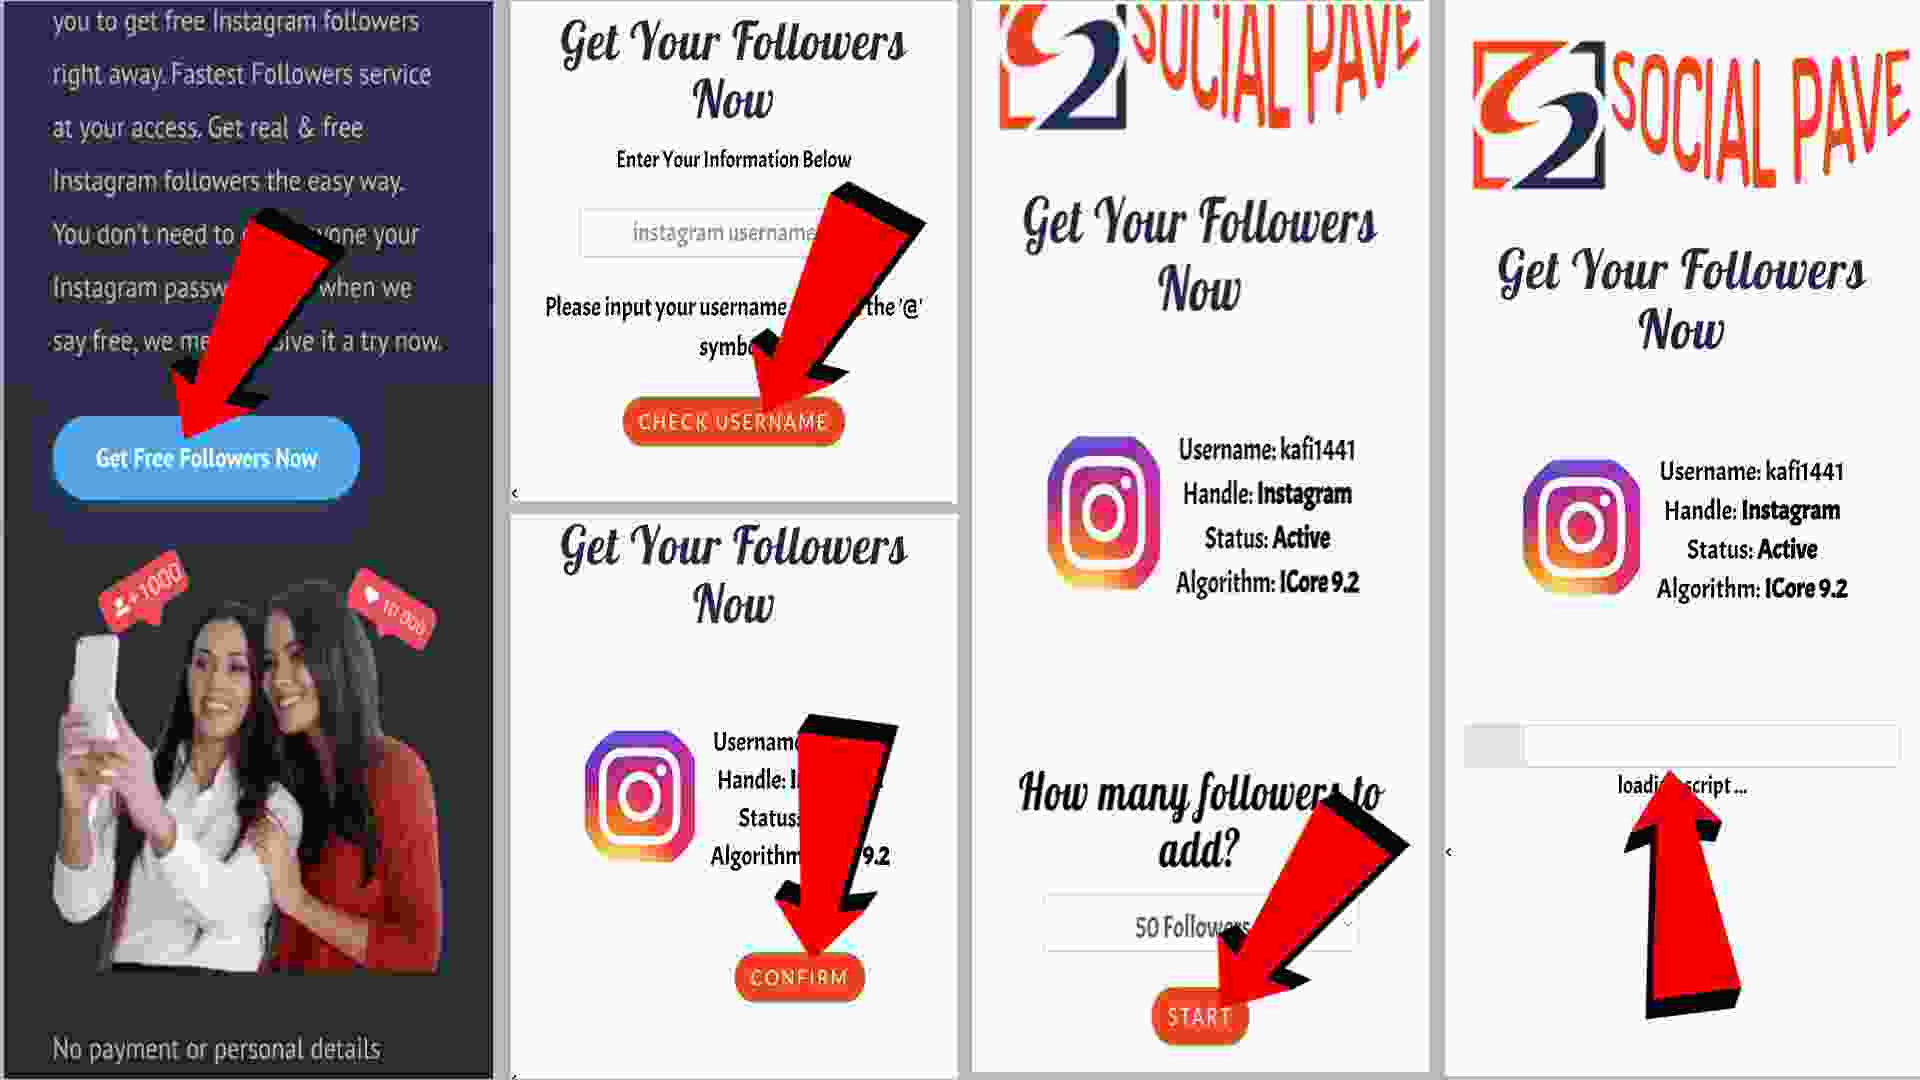 socialpave Website- Increase Followers On Instagram Trick 2022